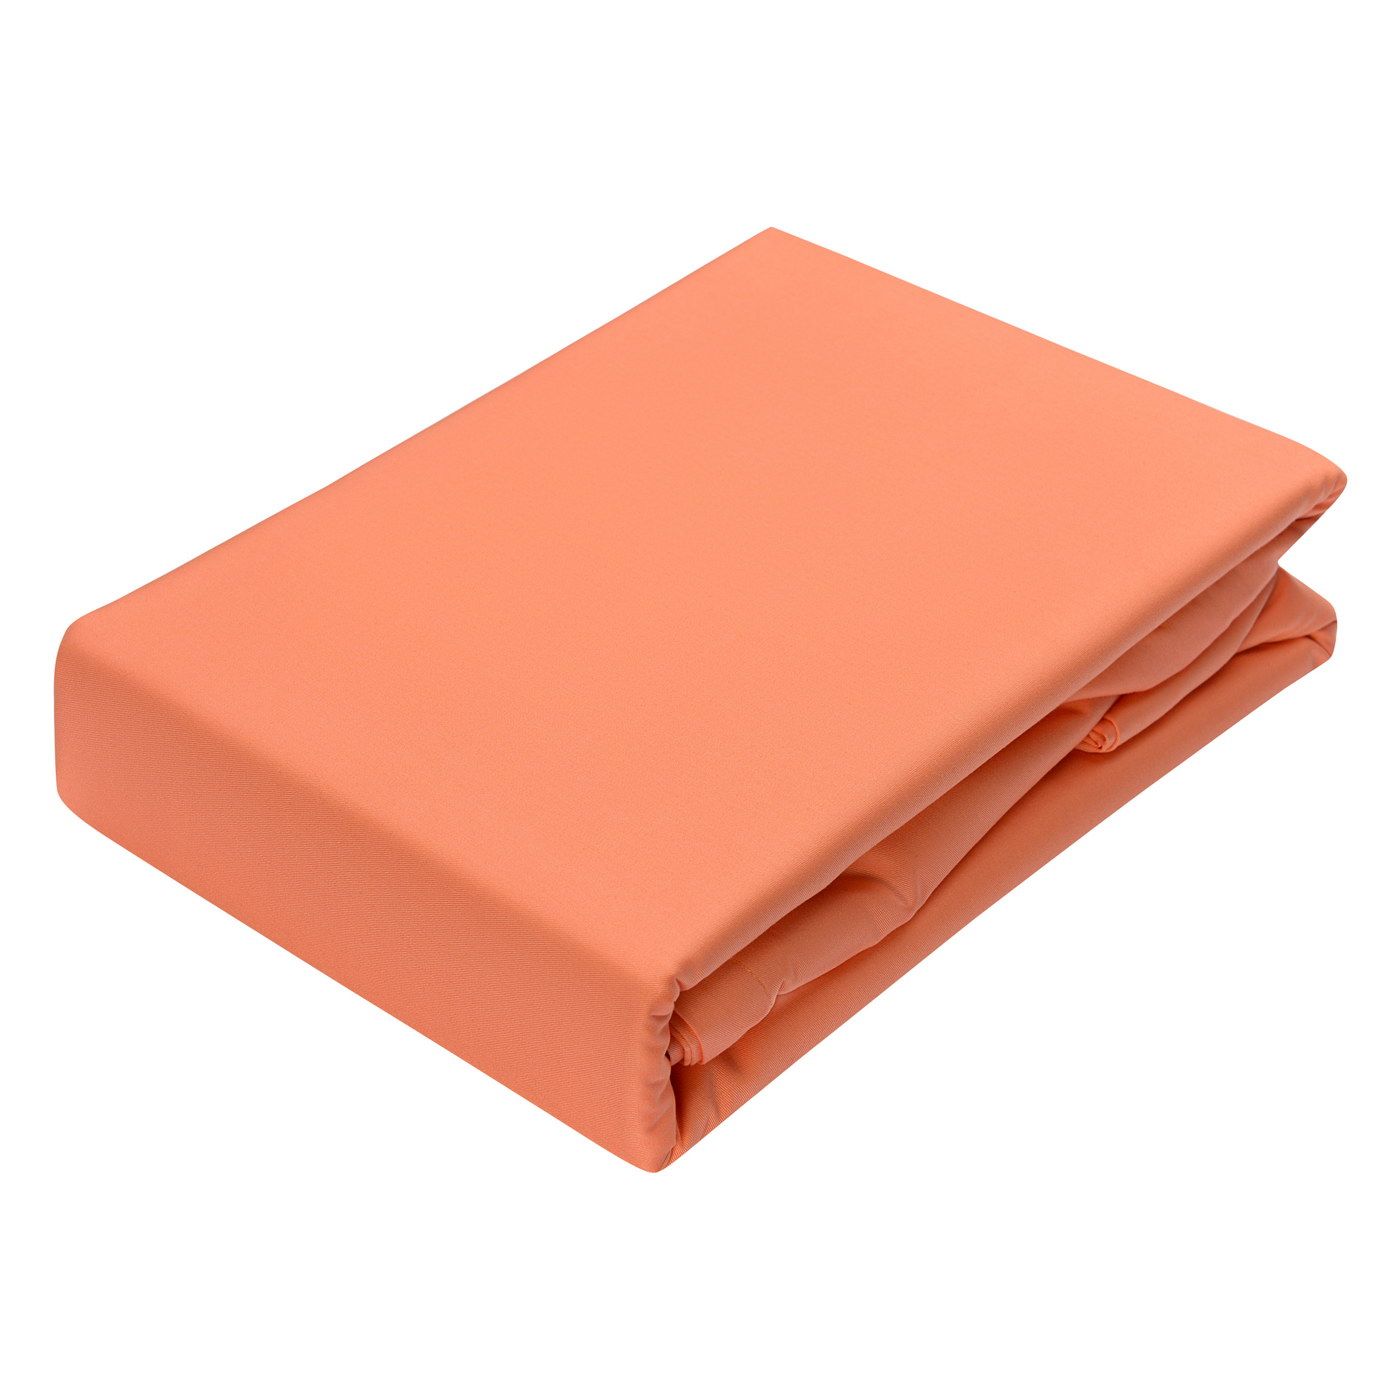 Пододеяльник Мармис цвет: оранжевый (200х220 см), размер 200х220 см sofi978987 Пододеяльник Мармис цвет: оранжевый (200х220 см) - фото 1